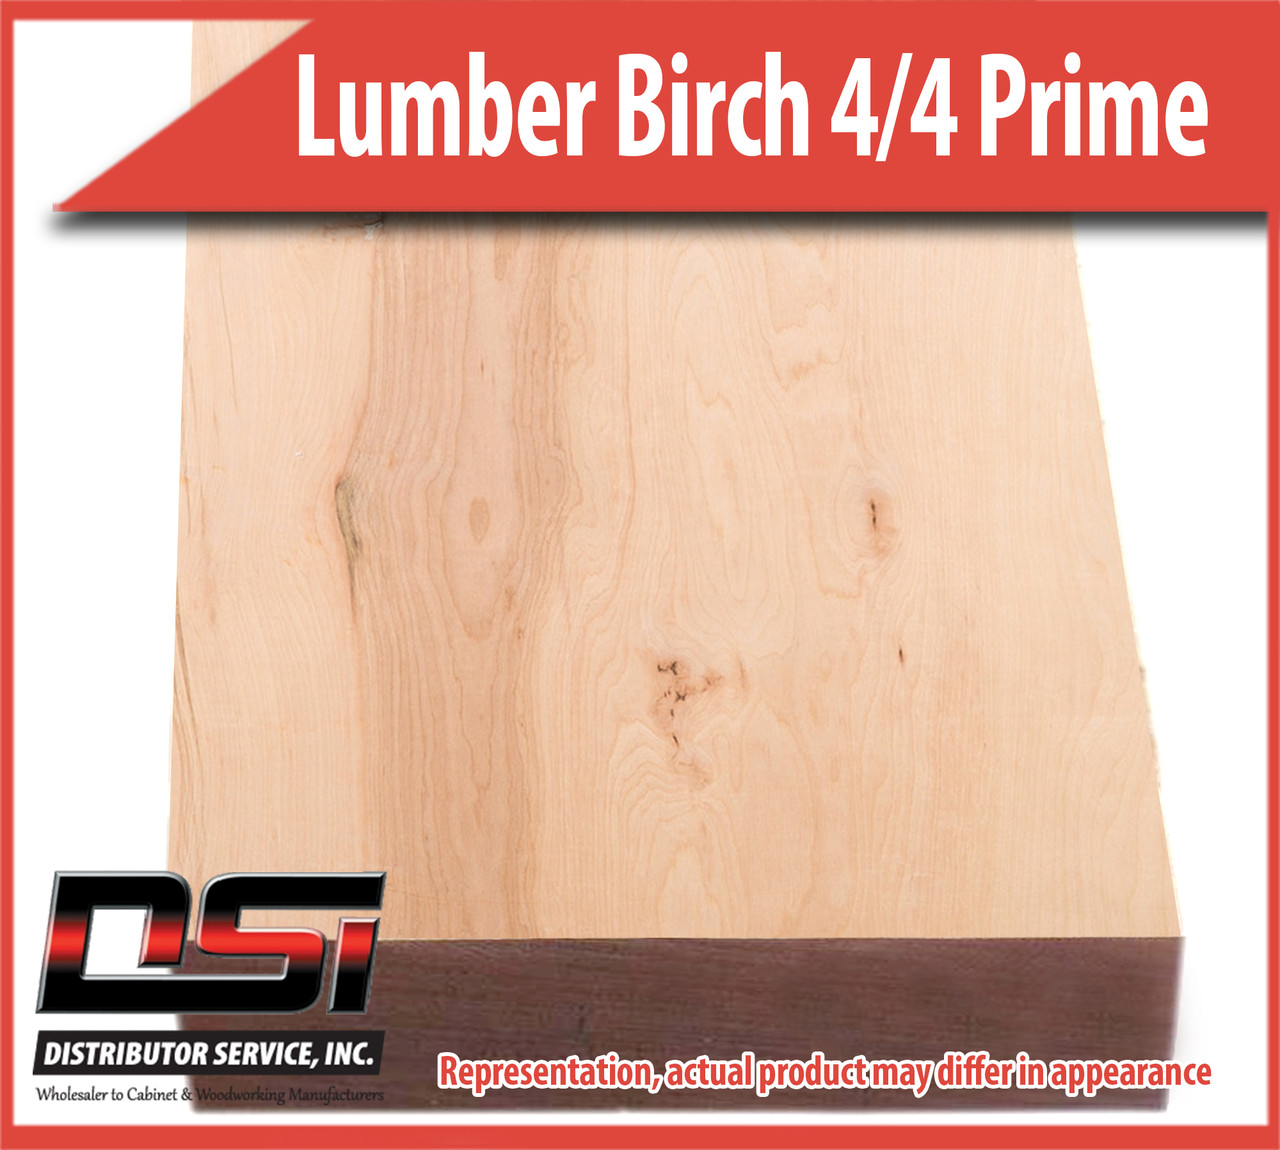 Domestic Hardwood Lumber Birch 4/4 Prime Sap 15/16" 9'